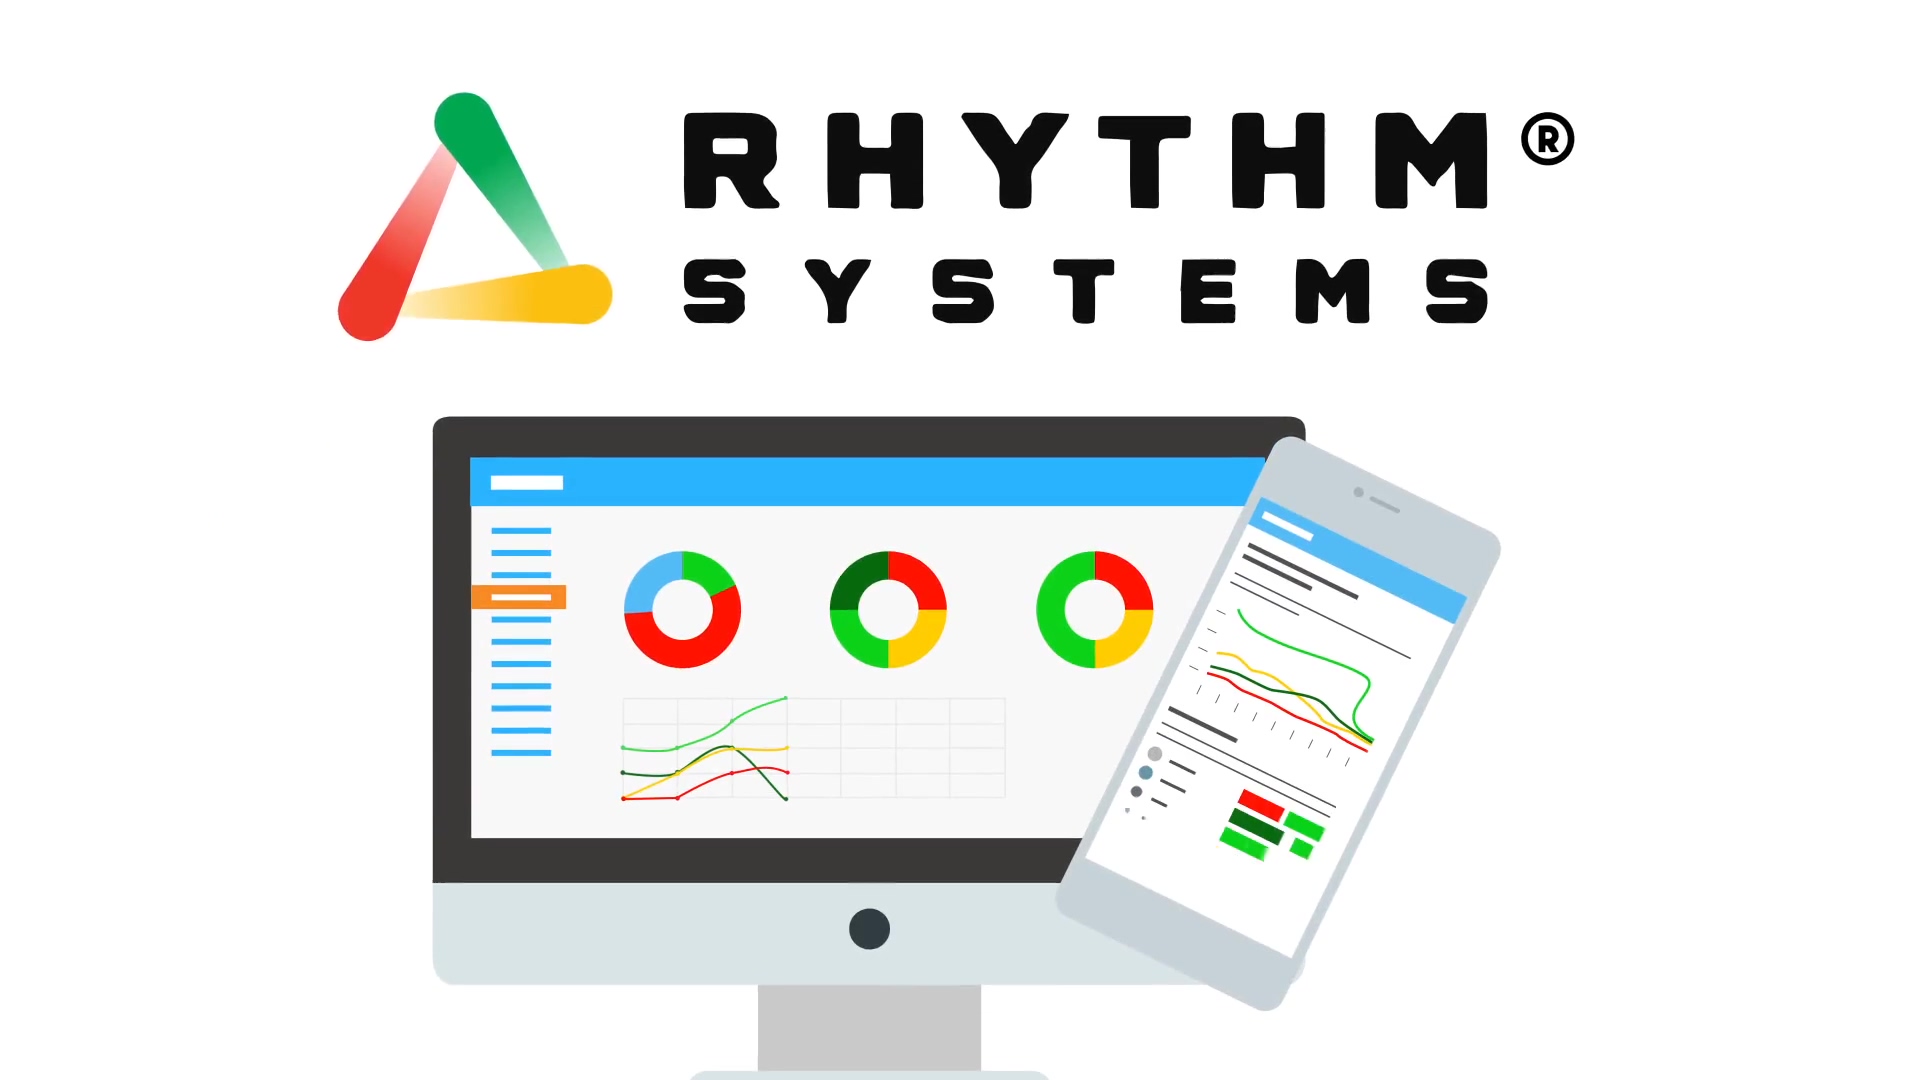 The Rhythm System Demo Video